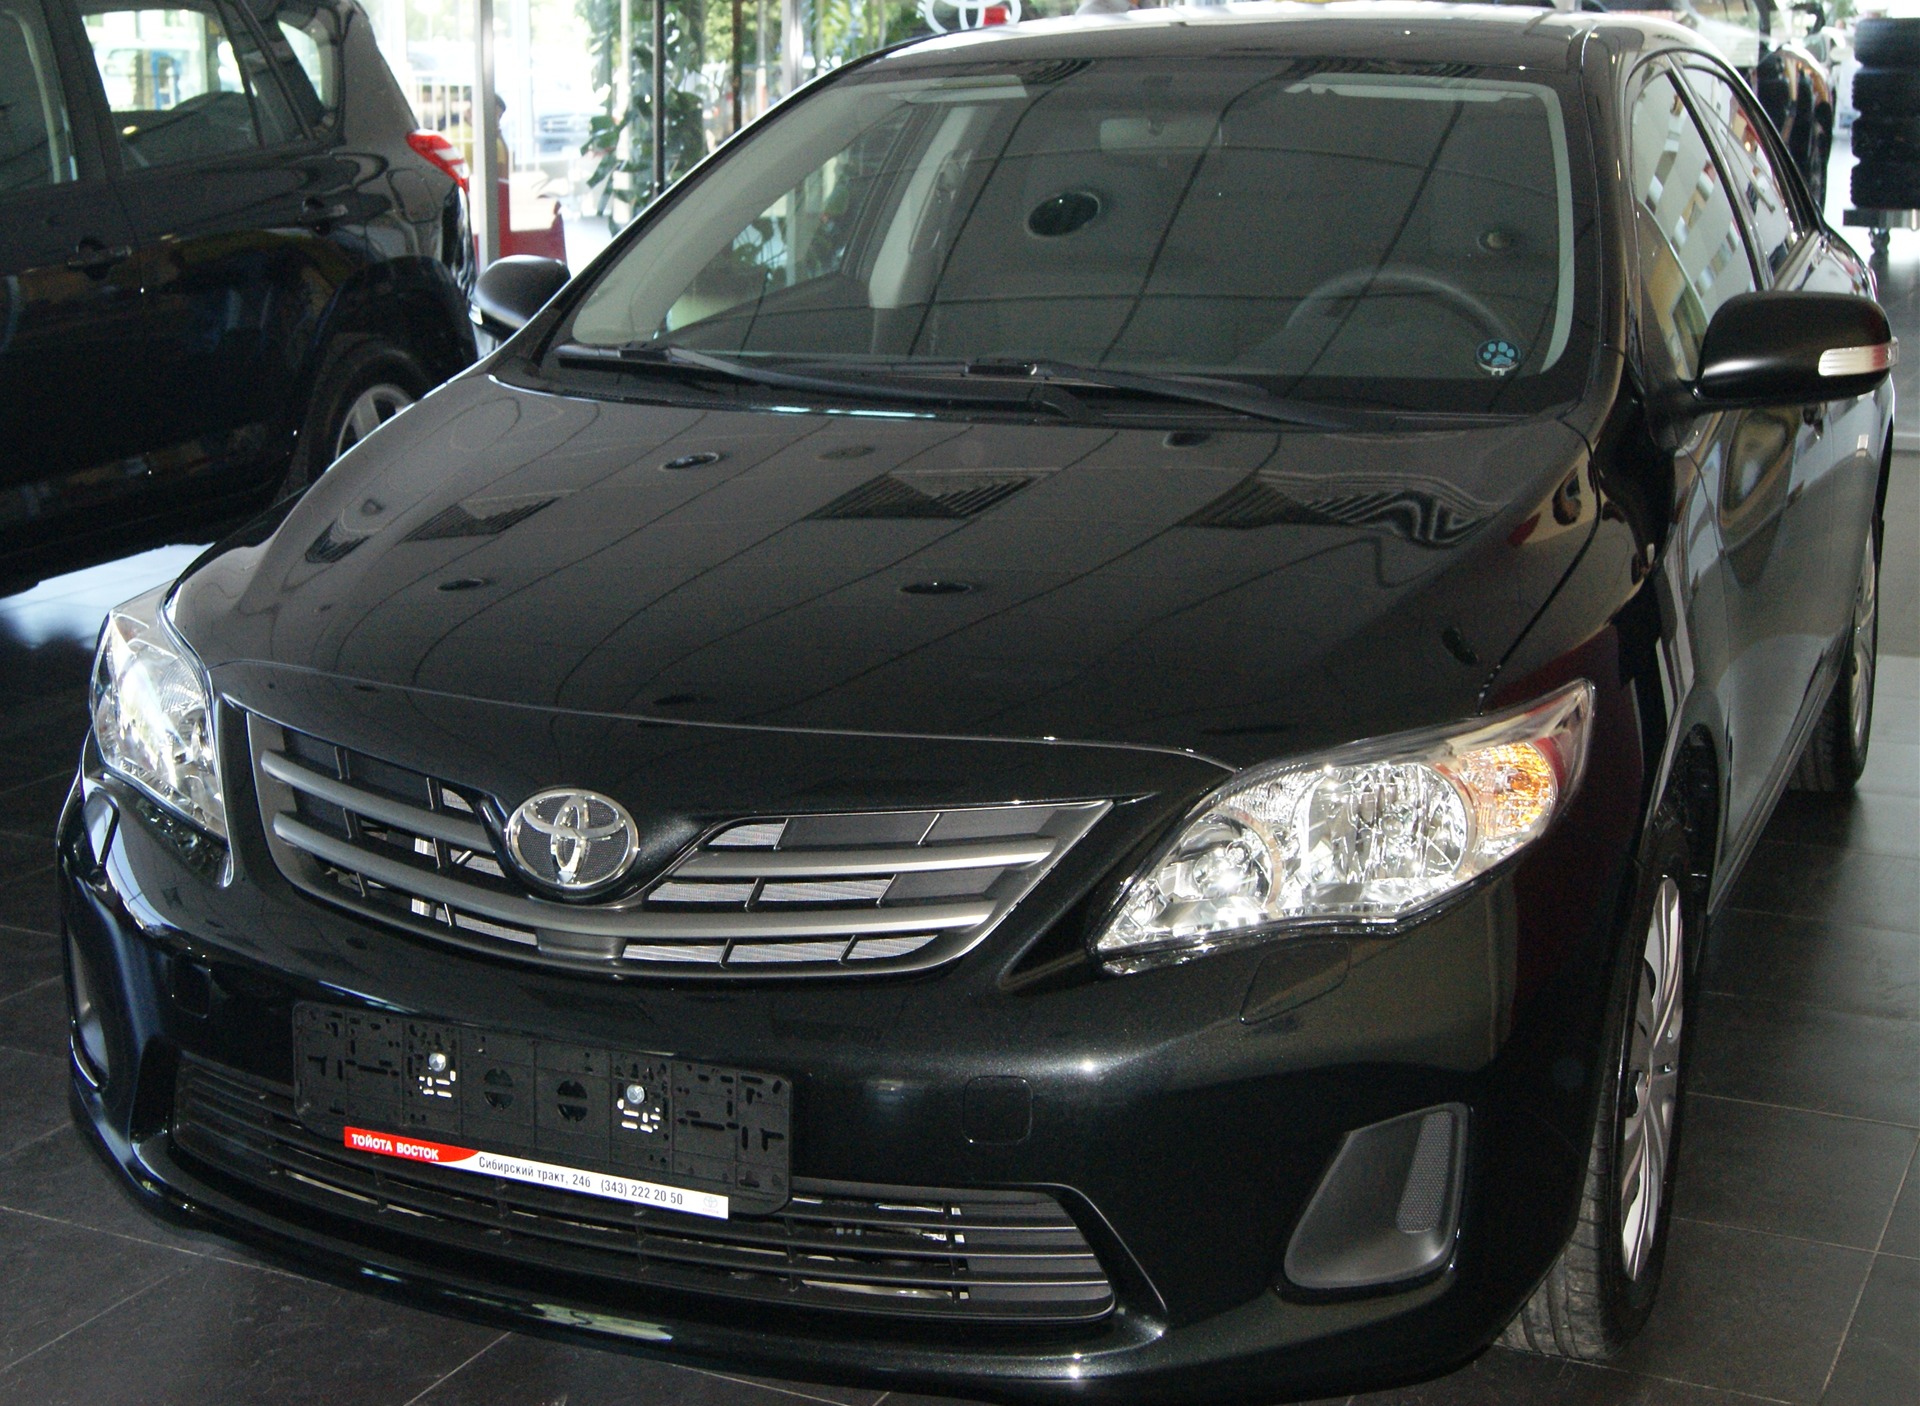      Toyota Corolla 16 2010